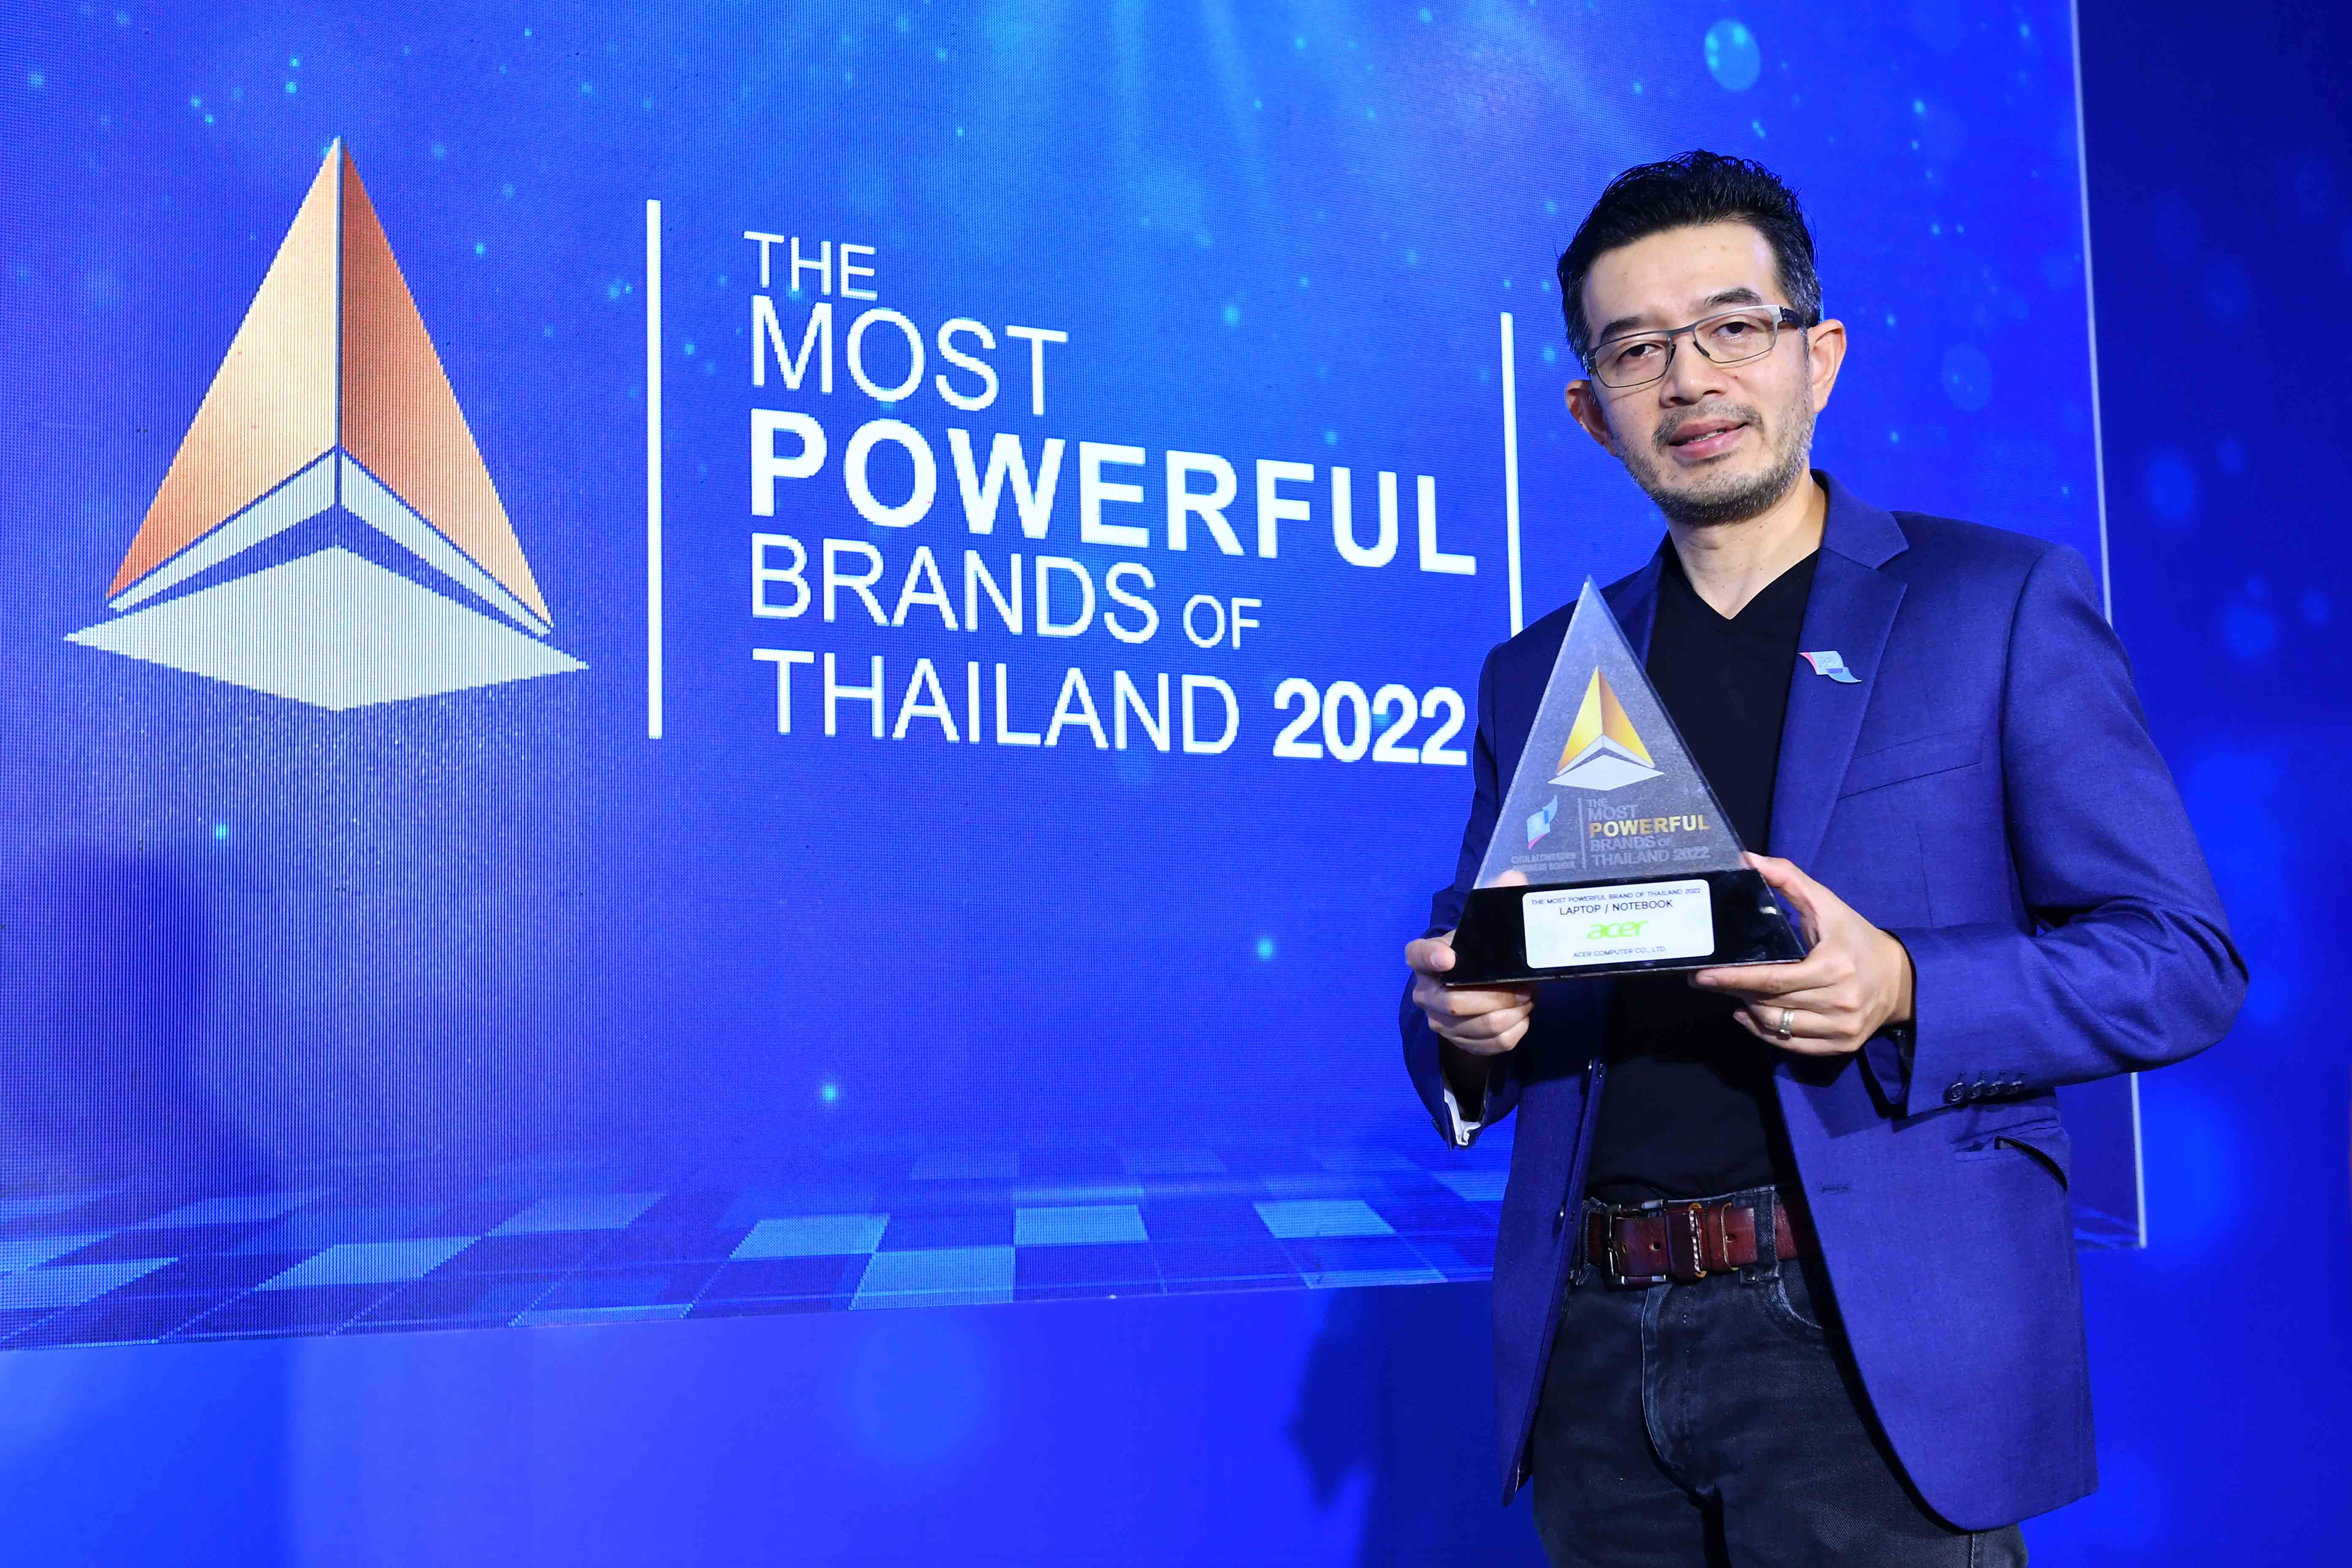 nitipat 01 “เอเซอร์” รับรางวัลสุดยอดแบรนด์ทรงพลังแห่งปี The Most Powerful Brand of Thailand 2022 ตอกย้ำความเป็นสุดยอดแบรนด์ทรงพลังติดต่อกันเป็นปีที่ 6